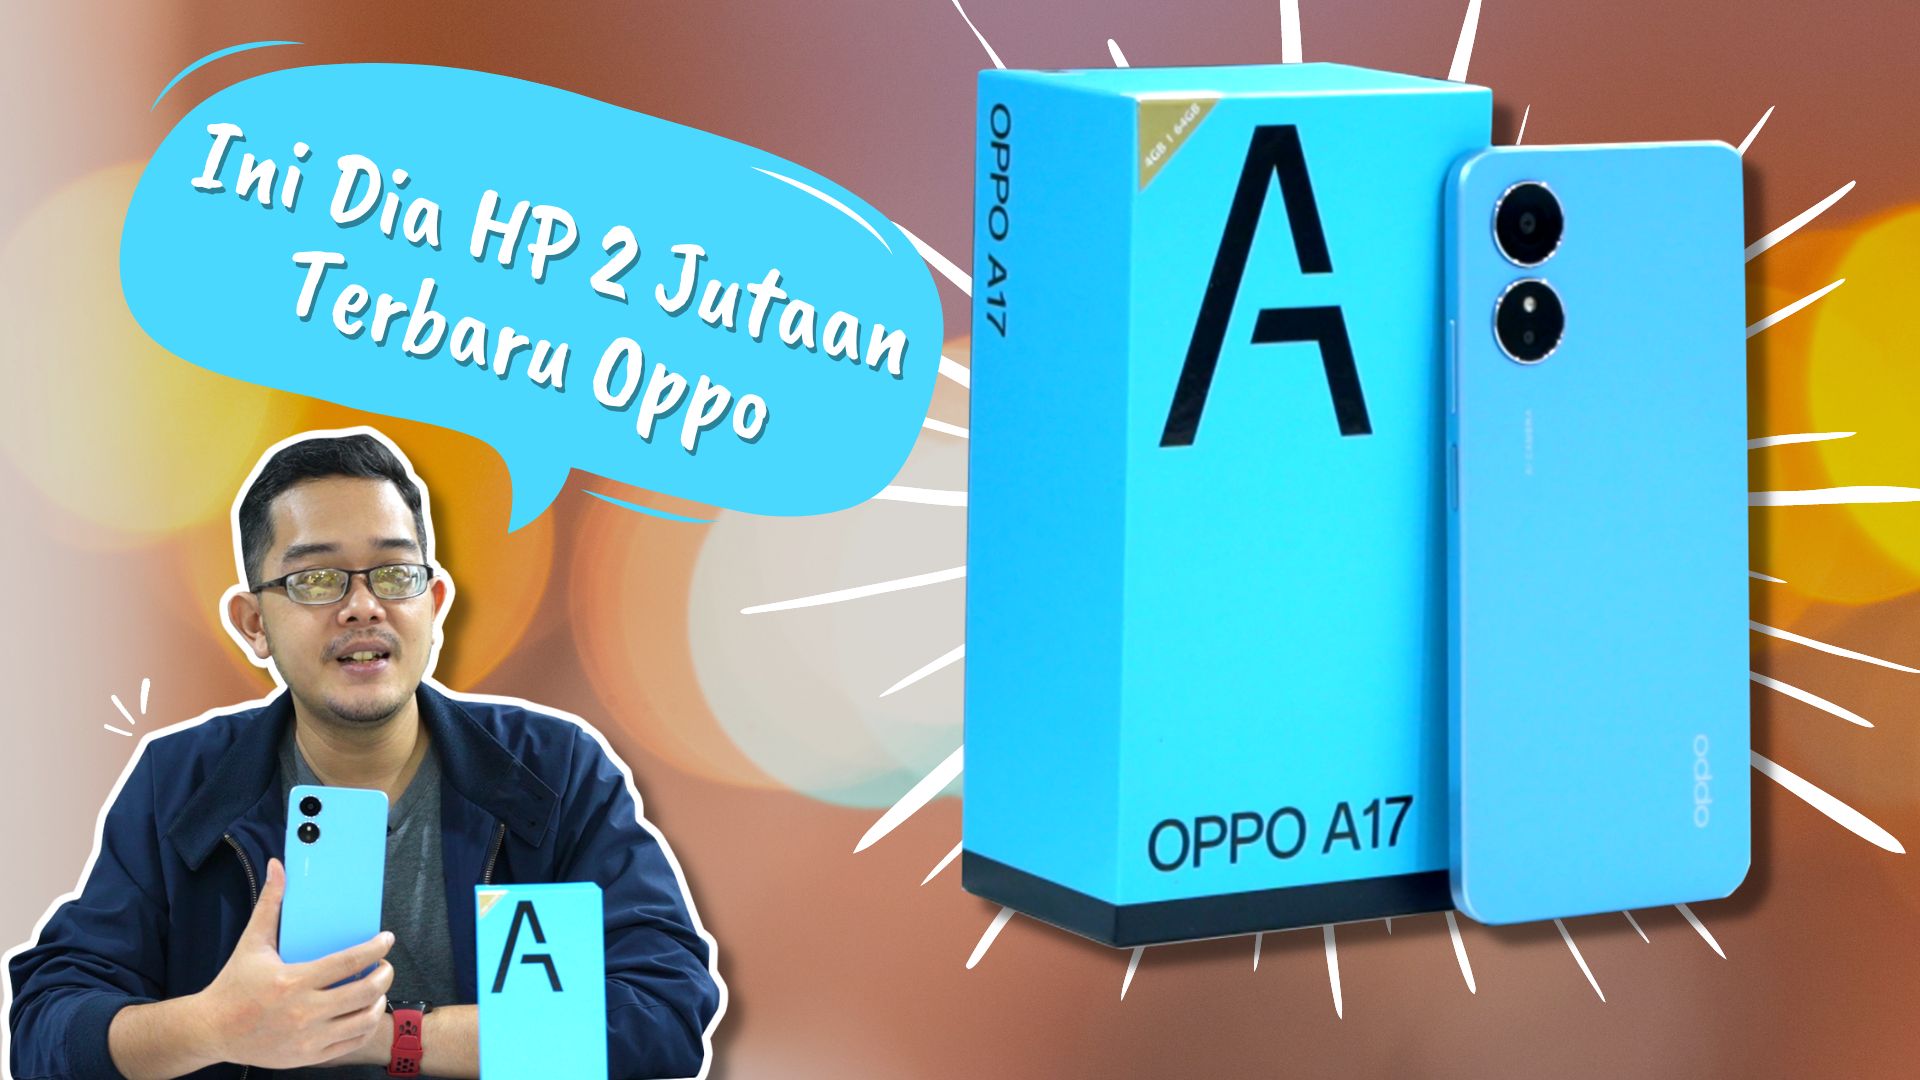 Hands-on Oppo A17, Hape 2 Jutaan Terbaru dari Oppo